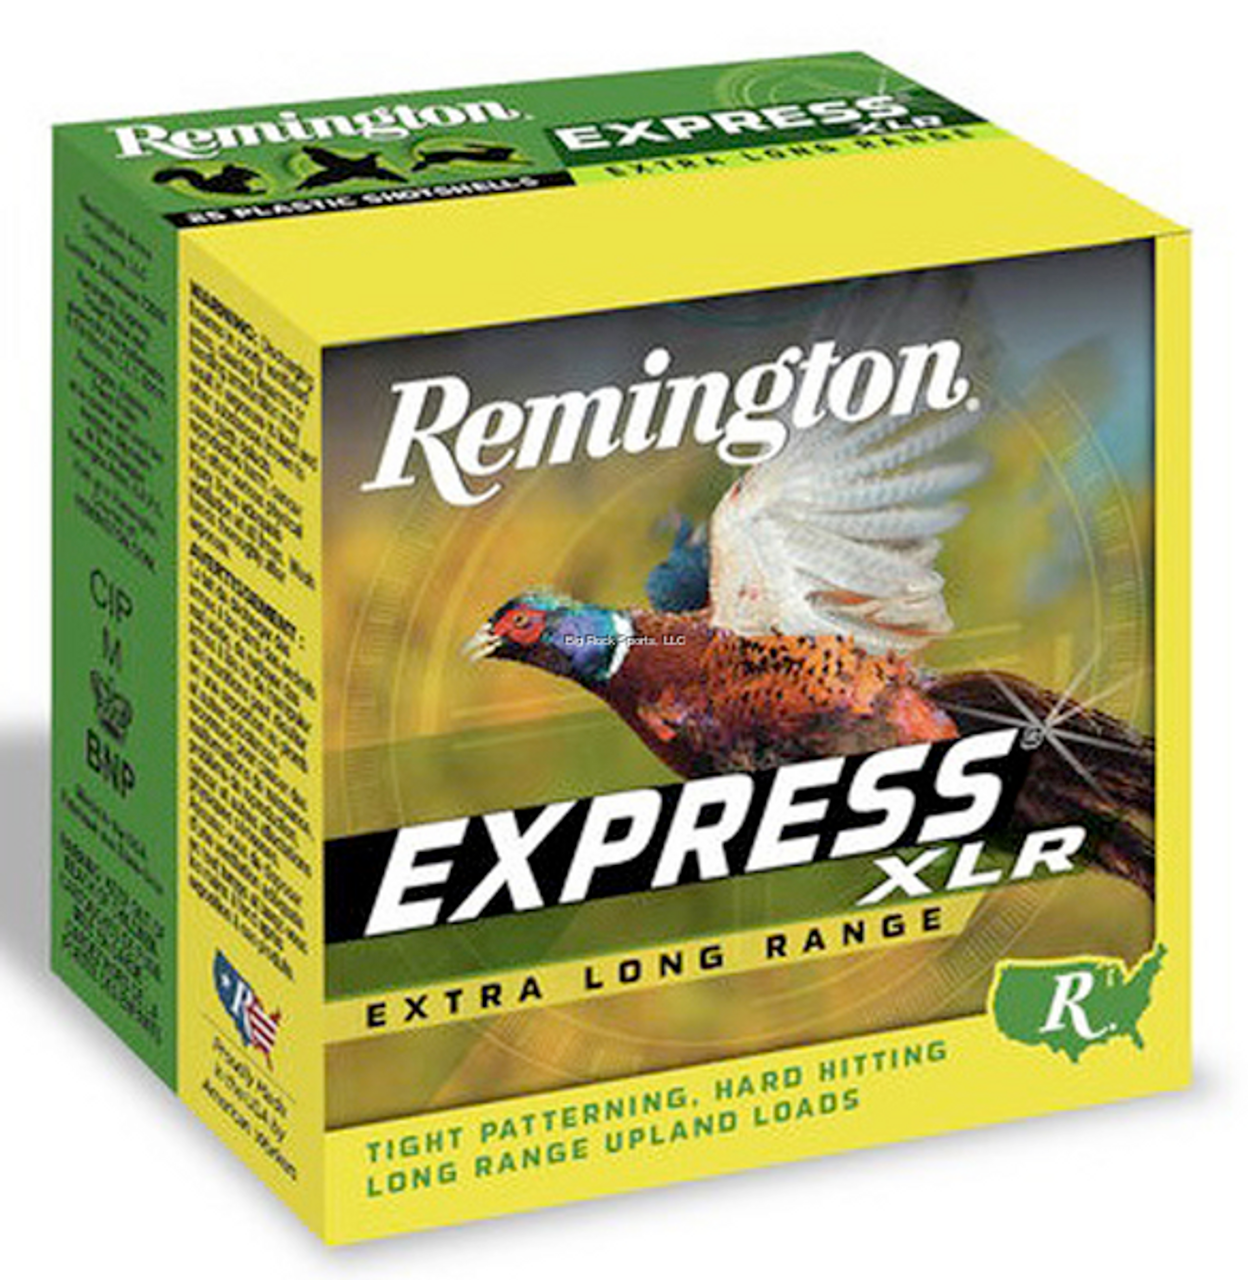 Remington Express Extra Long Range Shotshell 20 GA, 2-3/4 in, No. 7-1/2, 1oz, 2-3/4 Dr, 1220 fps, 25 Rnds